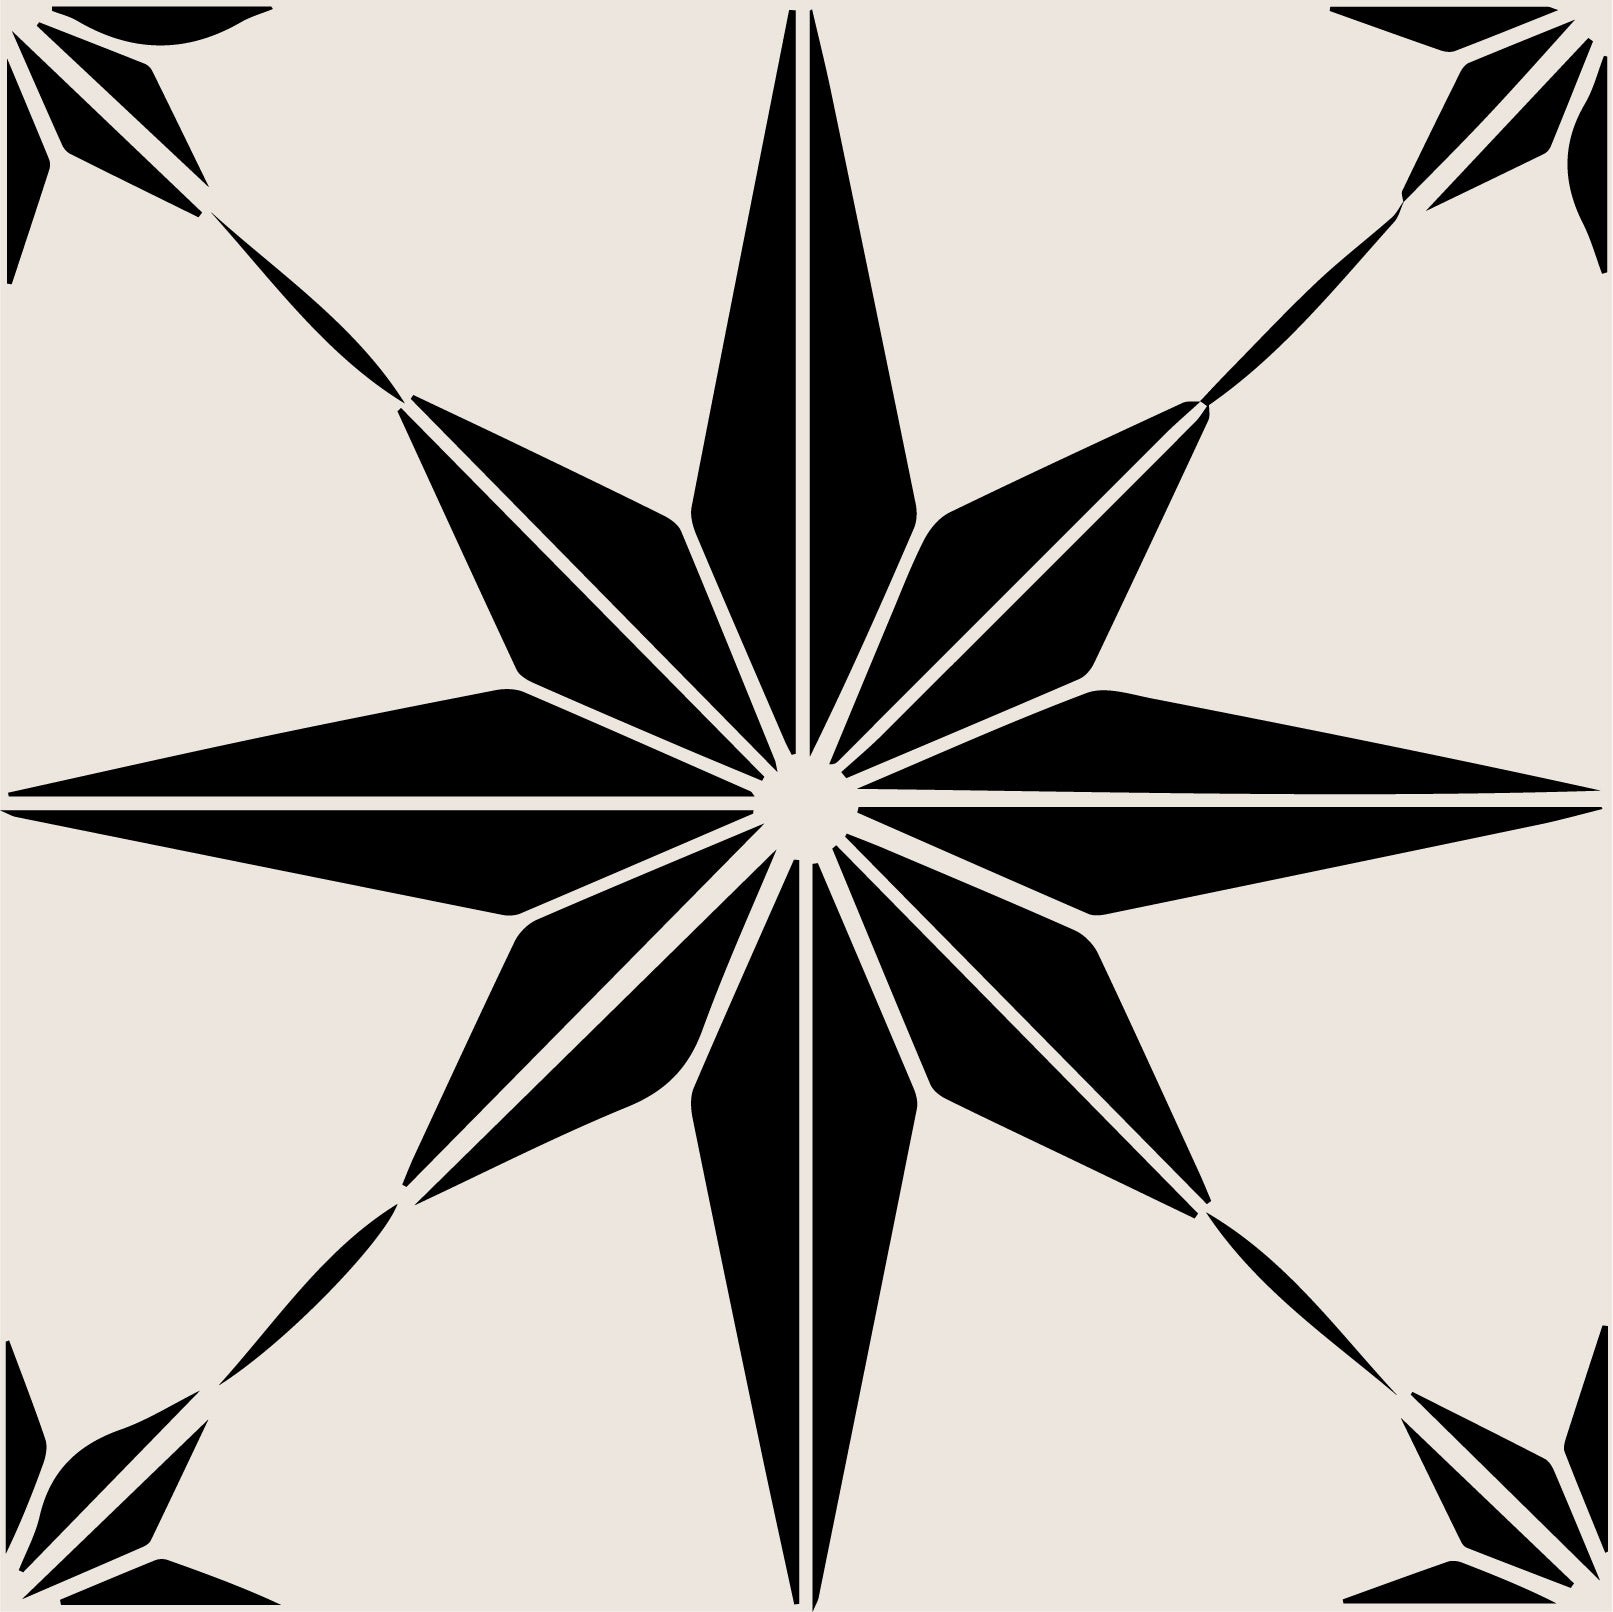 7" x 7" Black and White Mono Cross Peel and Stick Tiles - Tuesday Morning-Peel and Stick Tiles